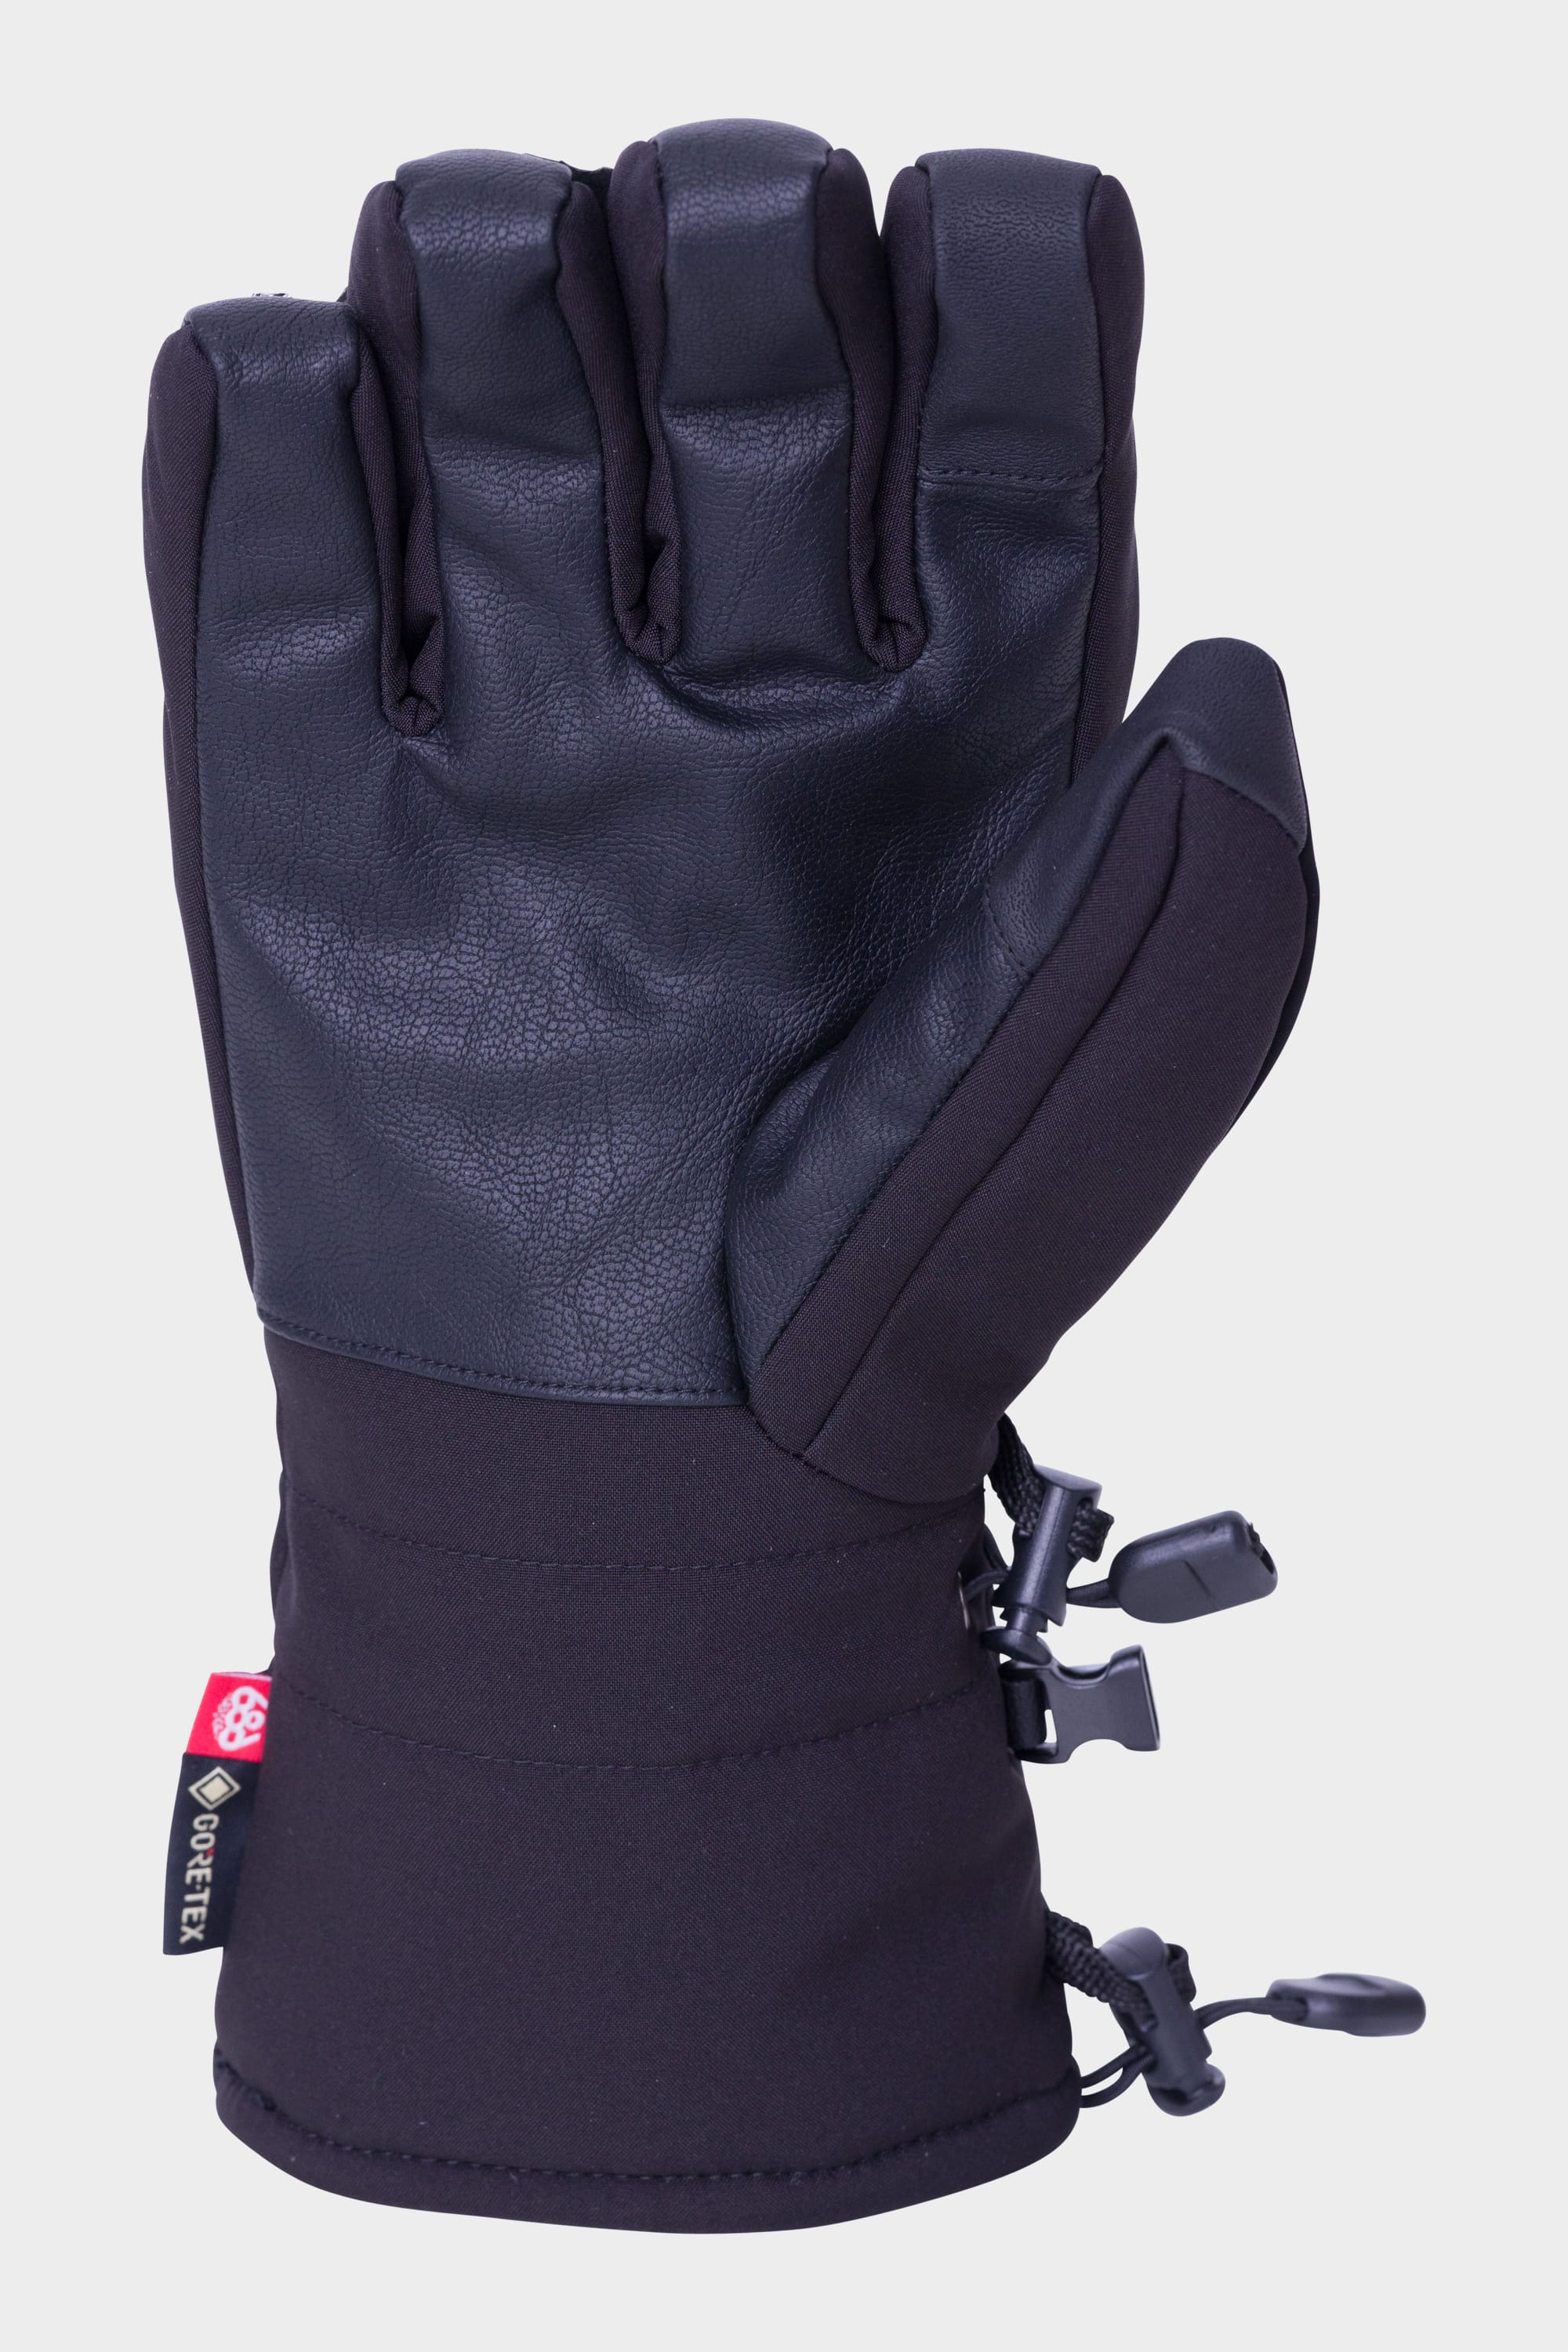 686 GORE-TEX Linear Glove - Men's Black M